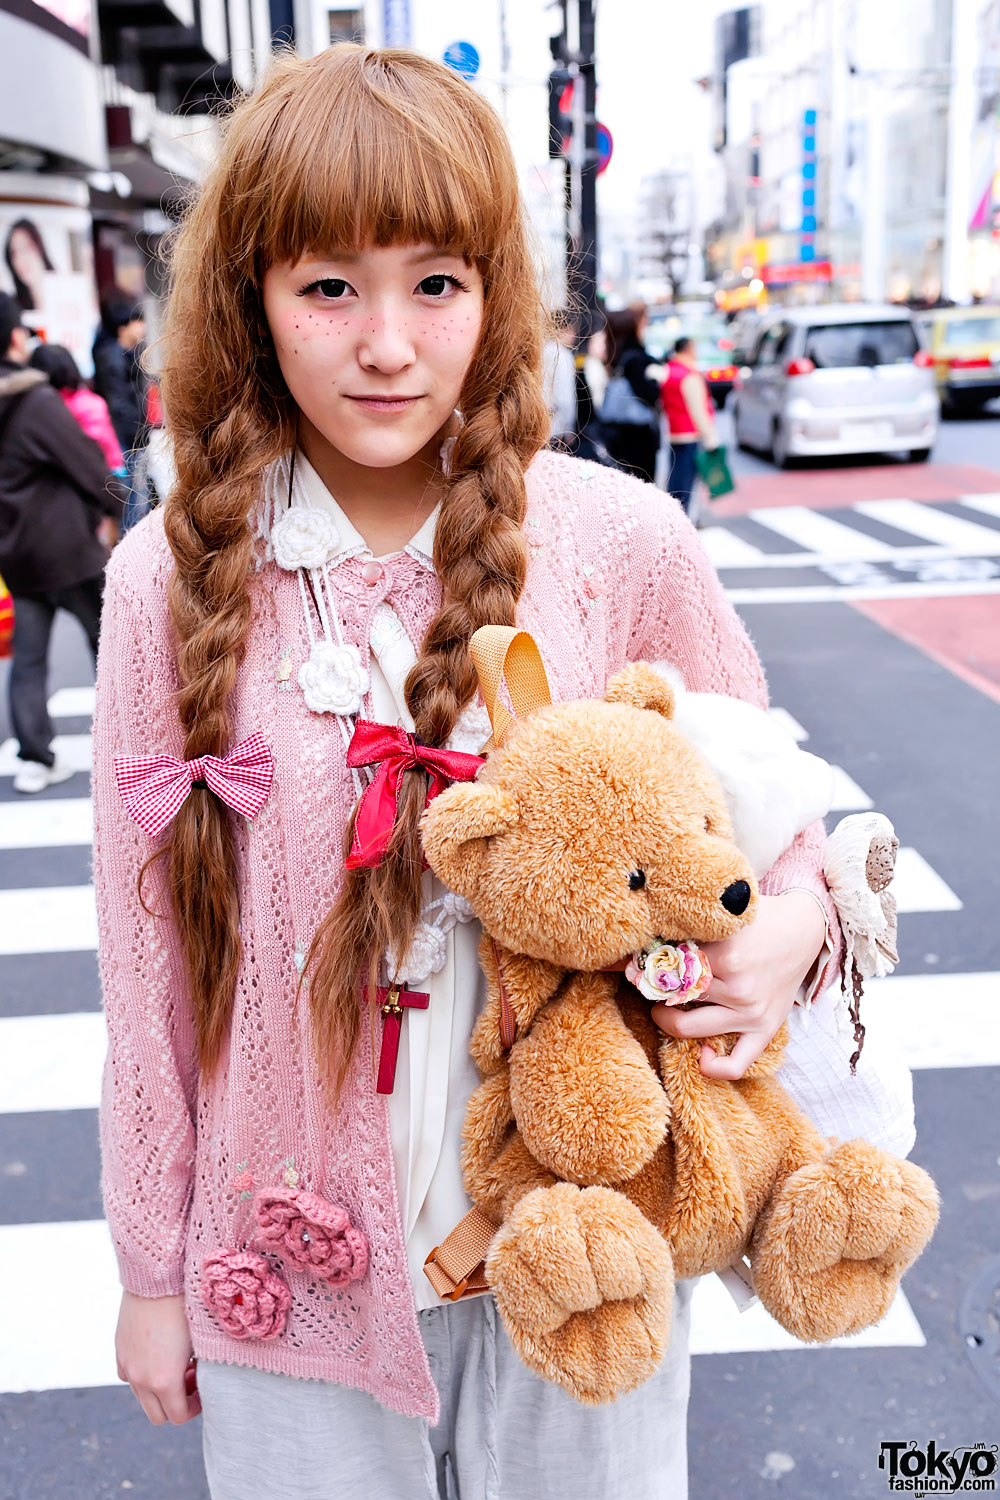 Harajuku Girls' Colorful Fashion & Cute Teddy Bears